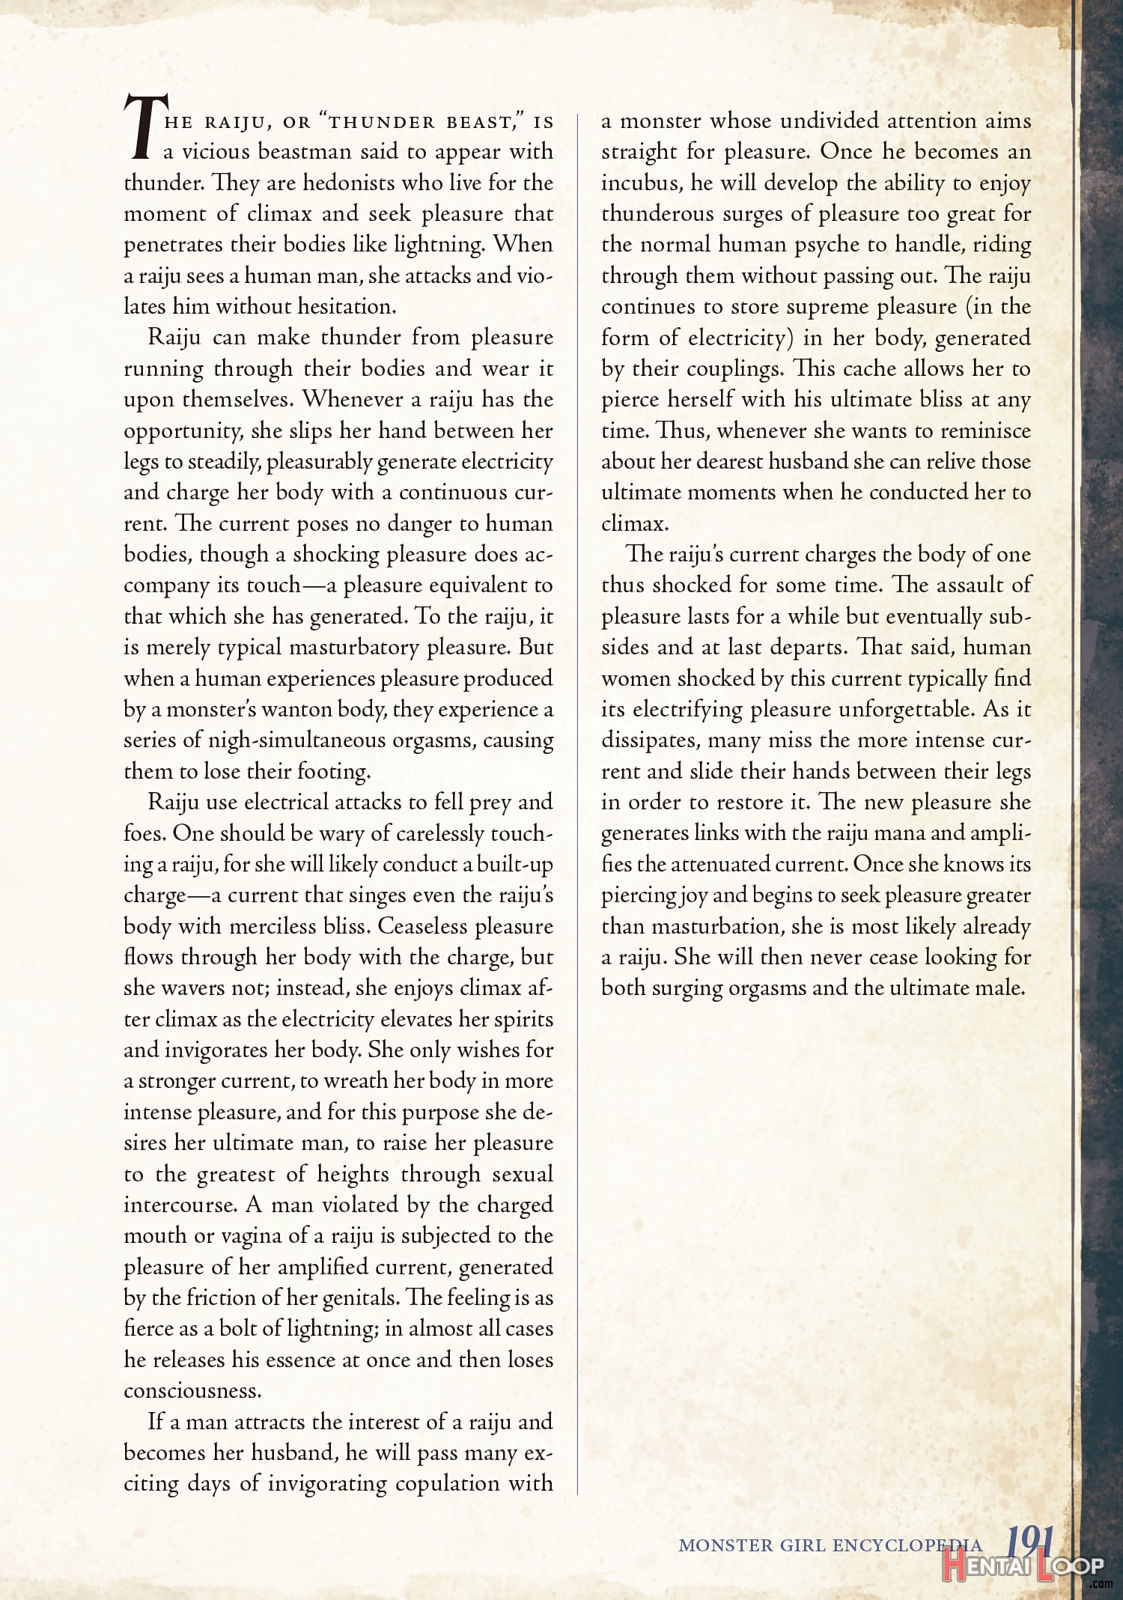 Monster Girl Encyclopedia Vol. 2 page 192